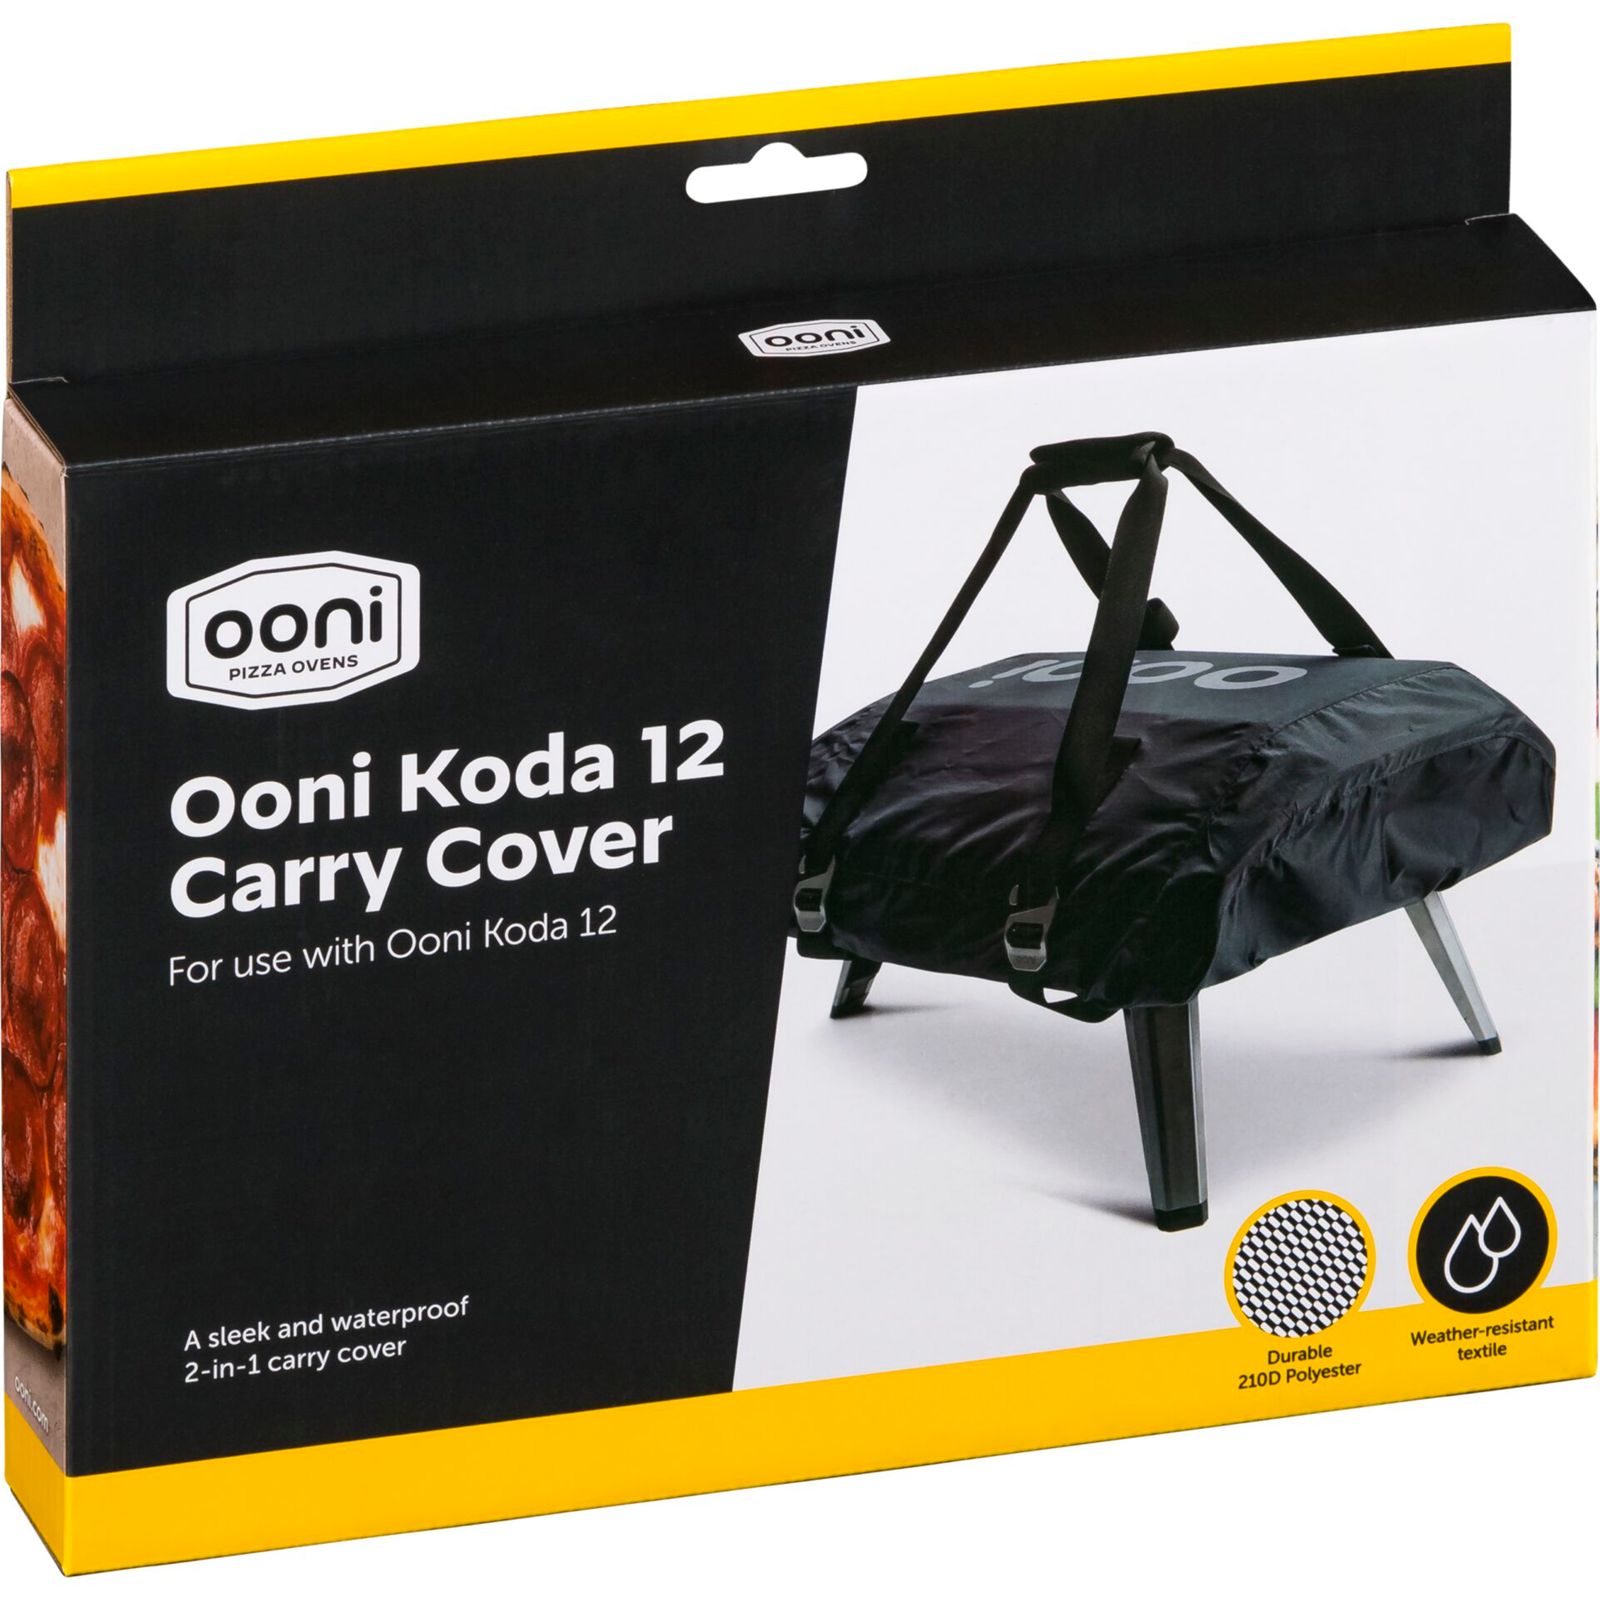 Ooni Koda 12 borsa da trasporto/ copertura